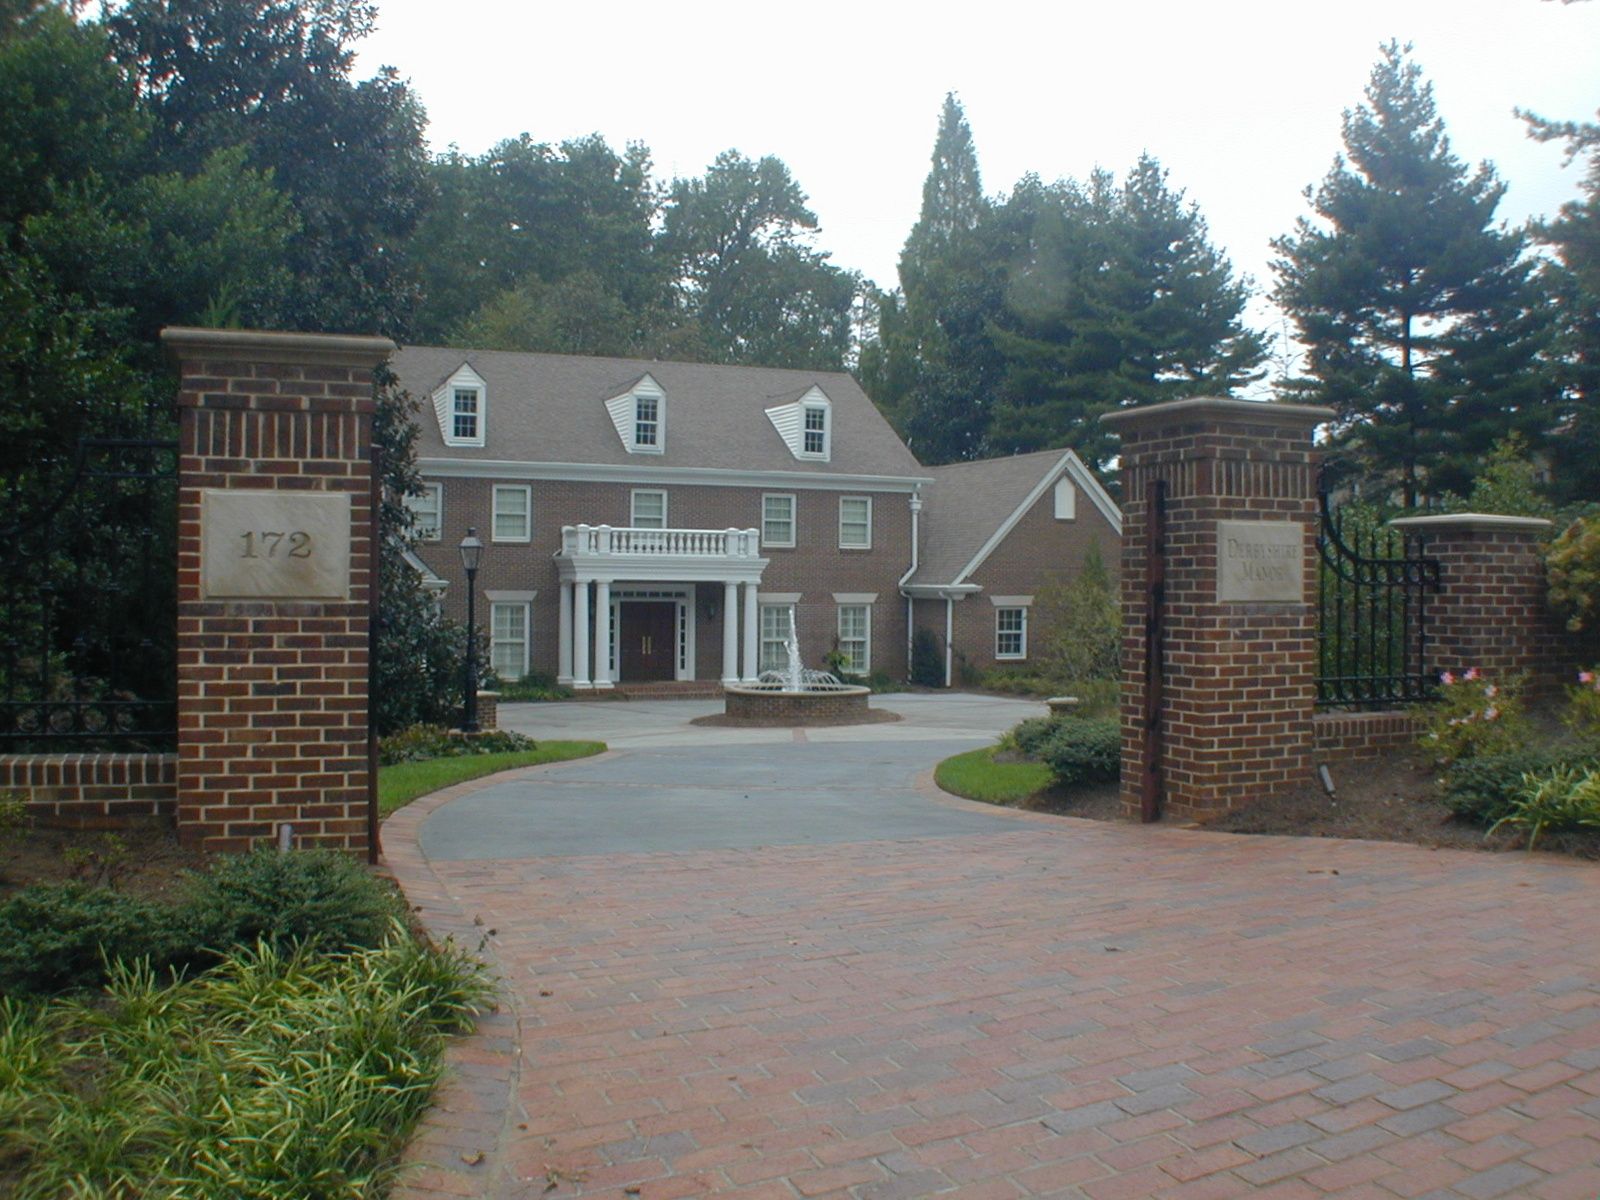 Estate driveway gated entrance brick